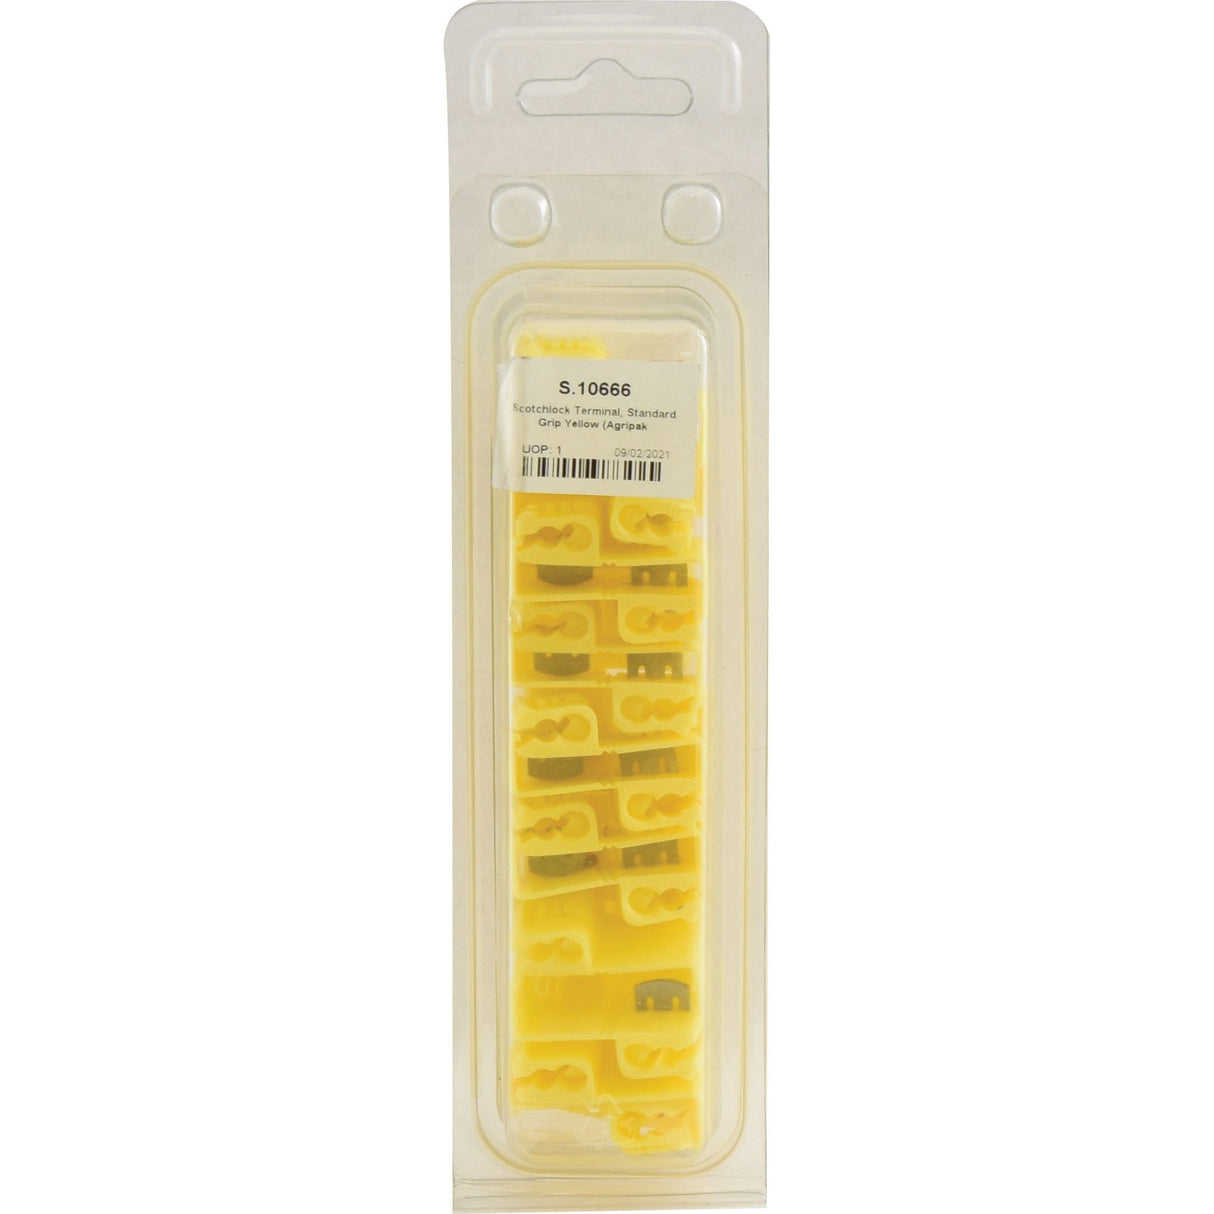 Scotchlock Terminal, Standard Grip Yellow (Agripak 25 pcs.)
 - S.10666 - Farming Parts